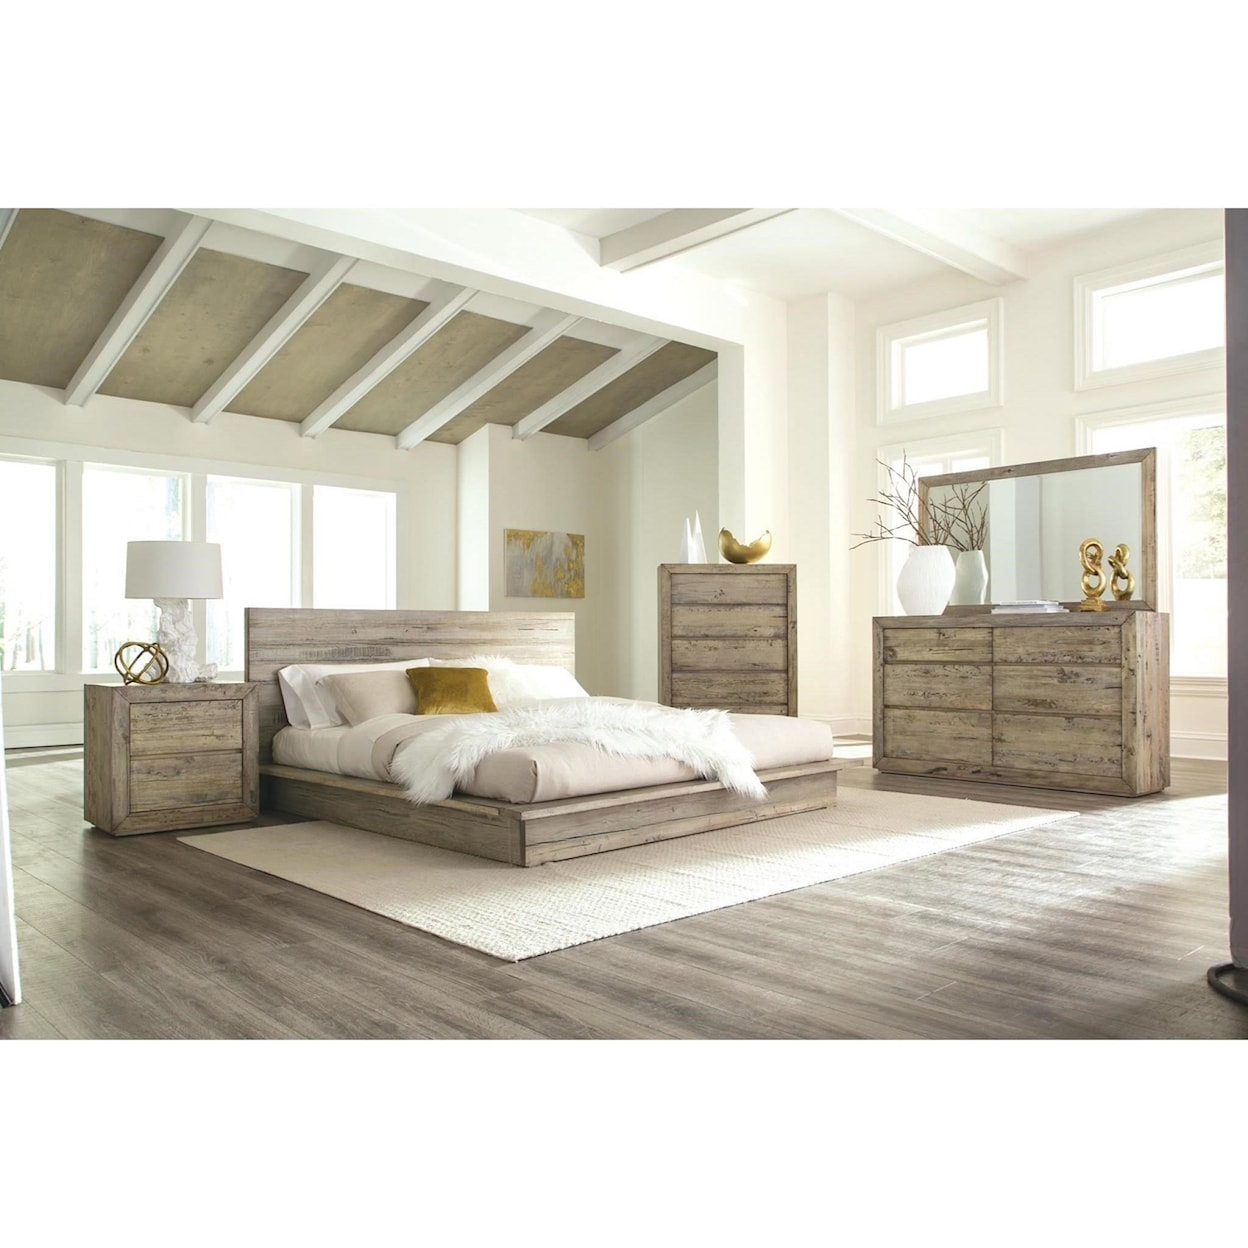 Napa Furniture Designs Renewal Queen Bed